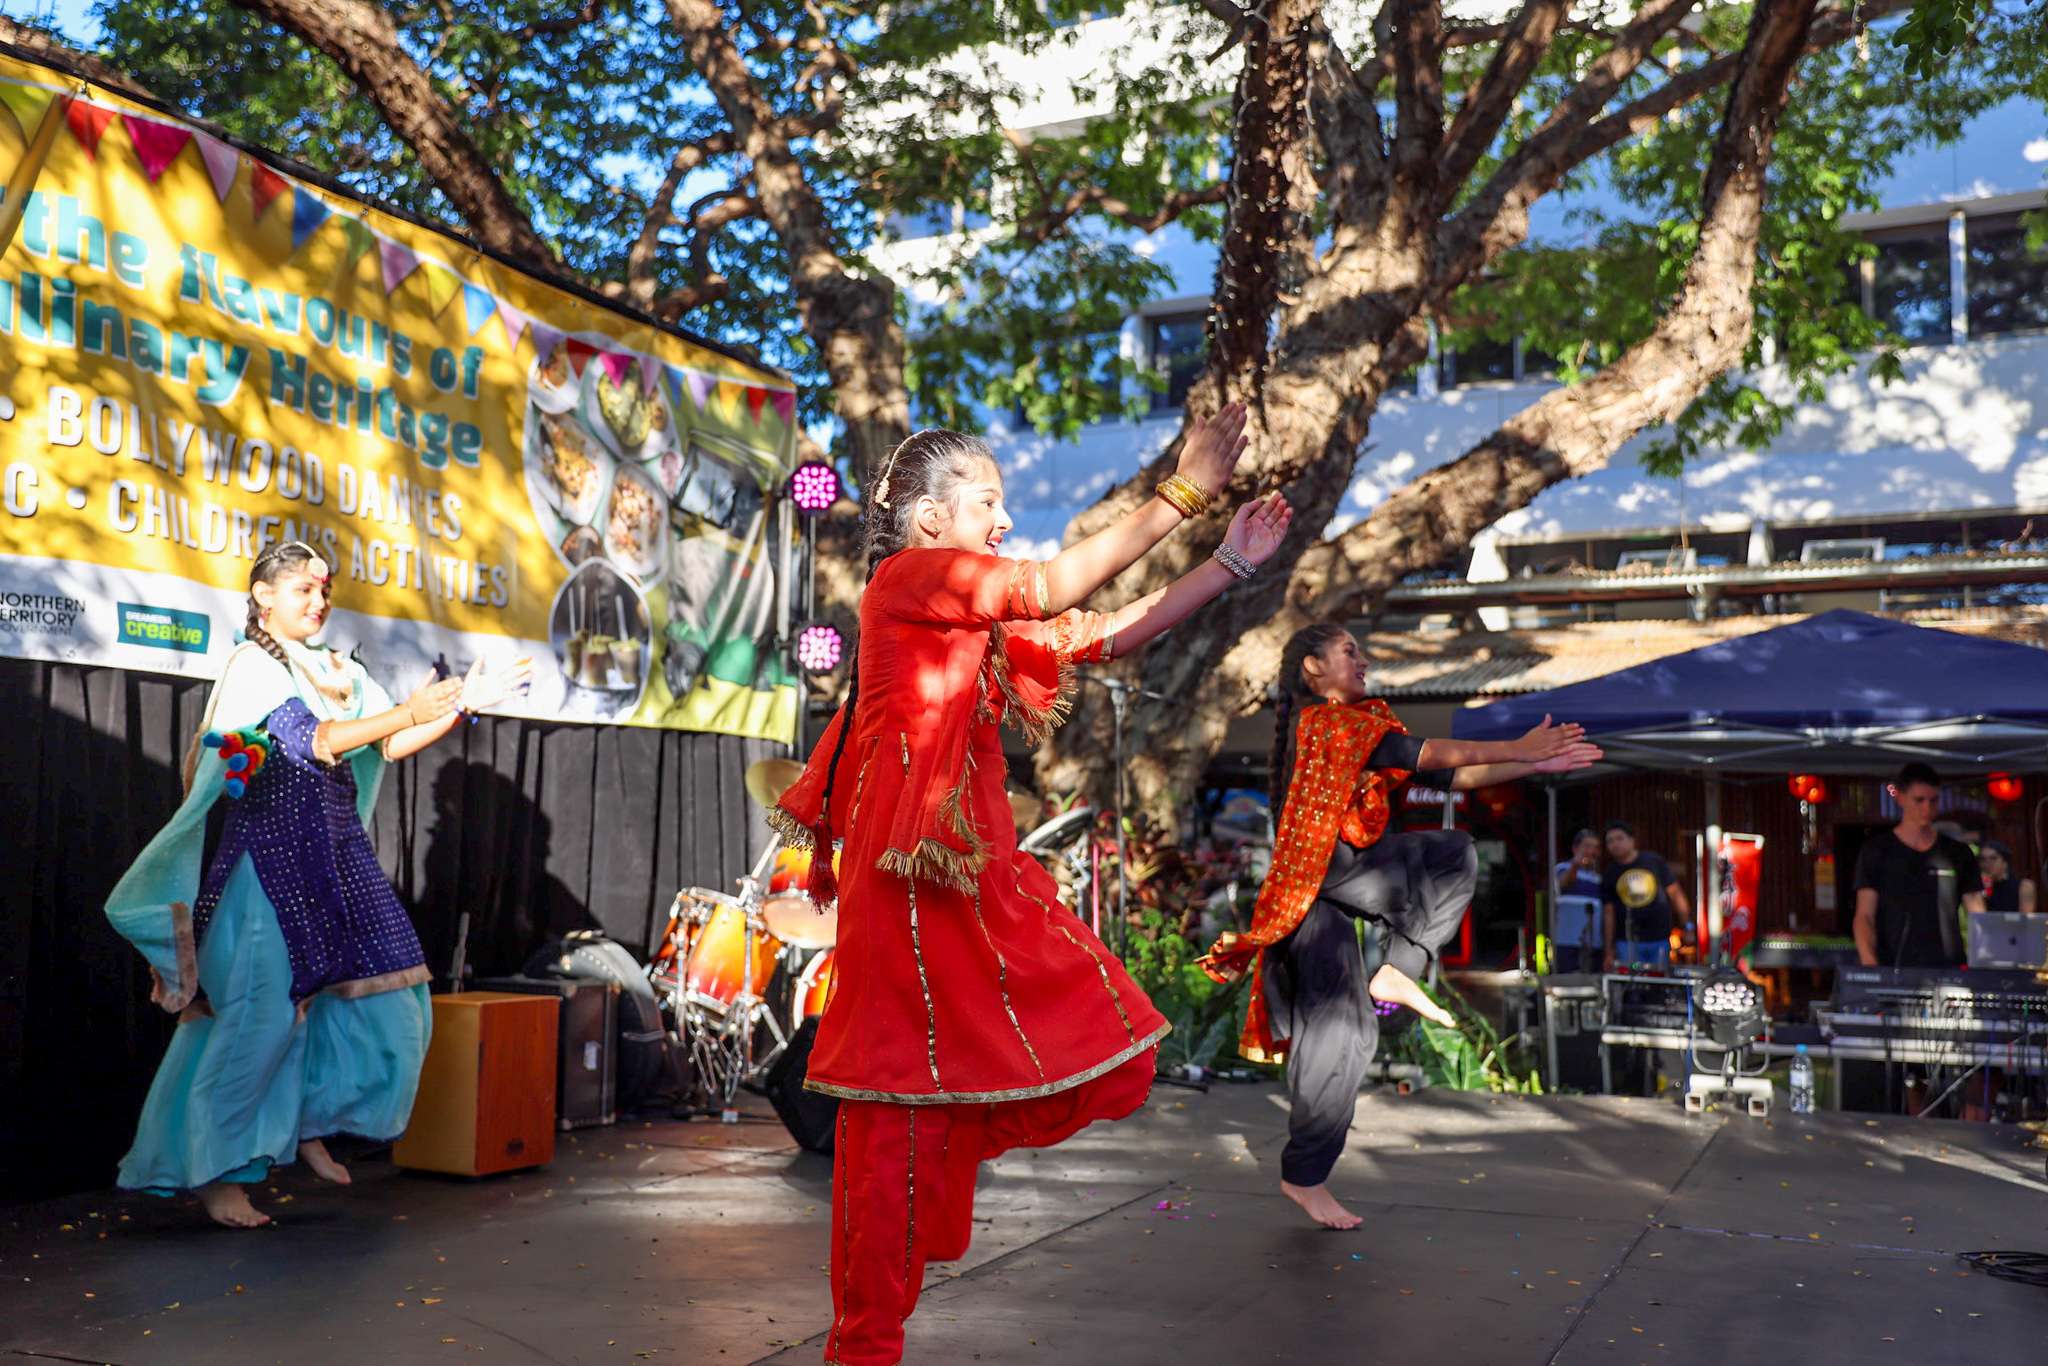 City of Darwin Indian Street Food Festival